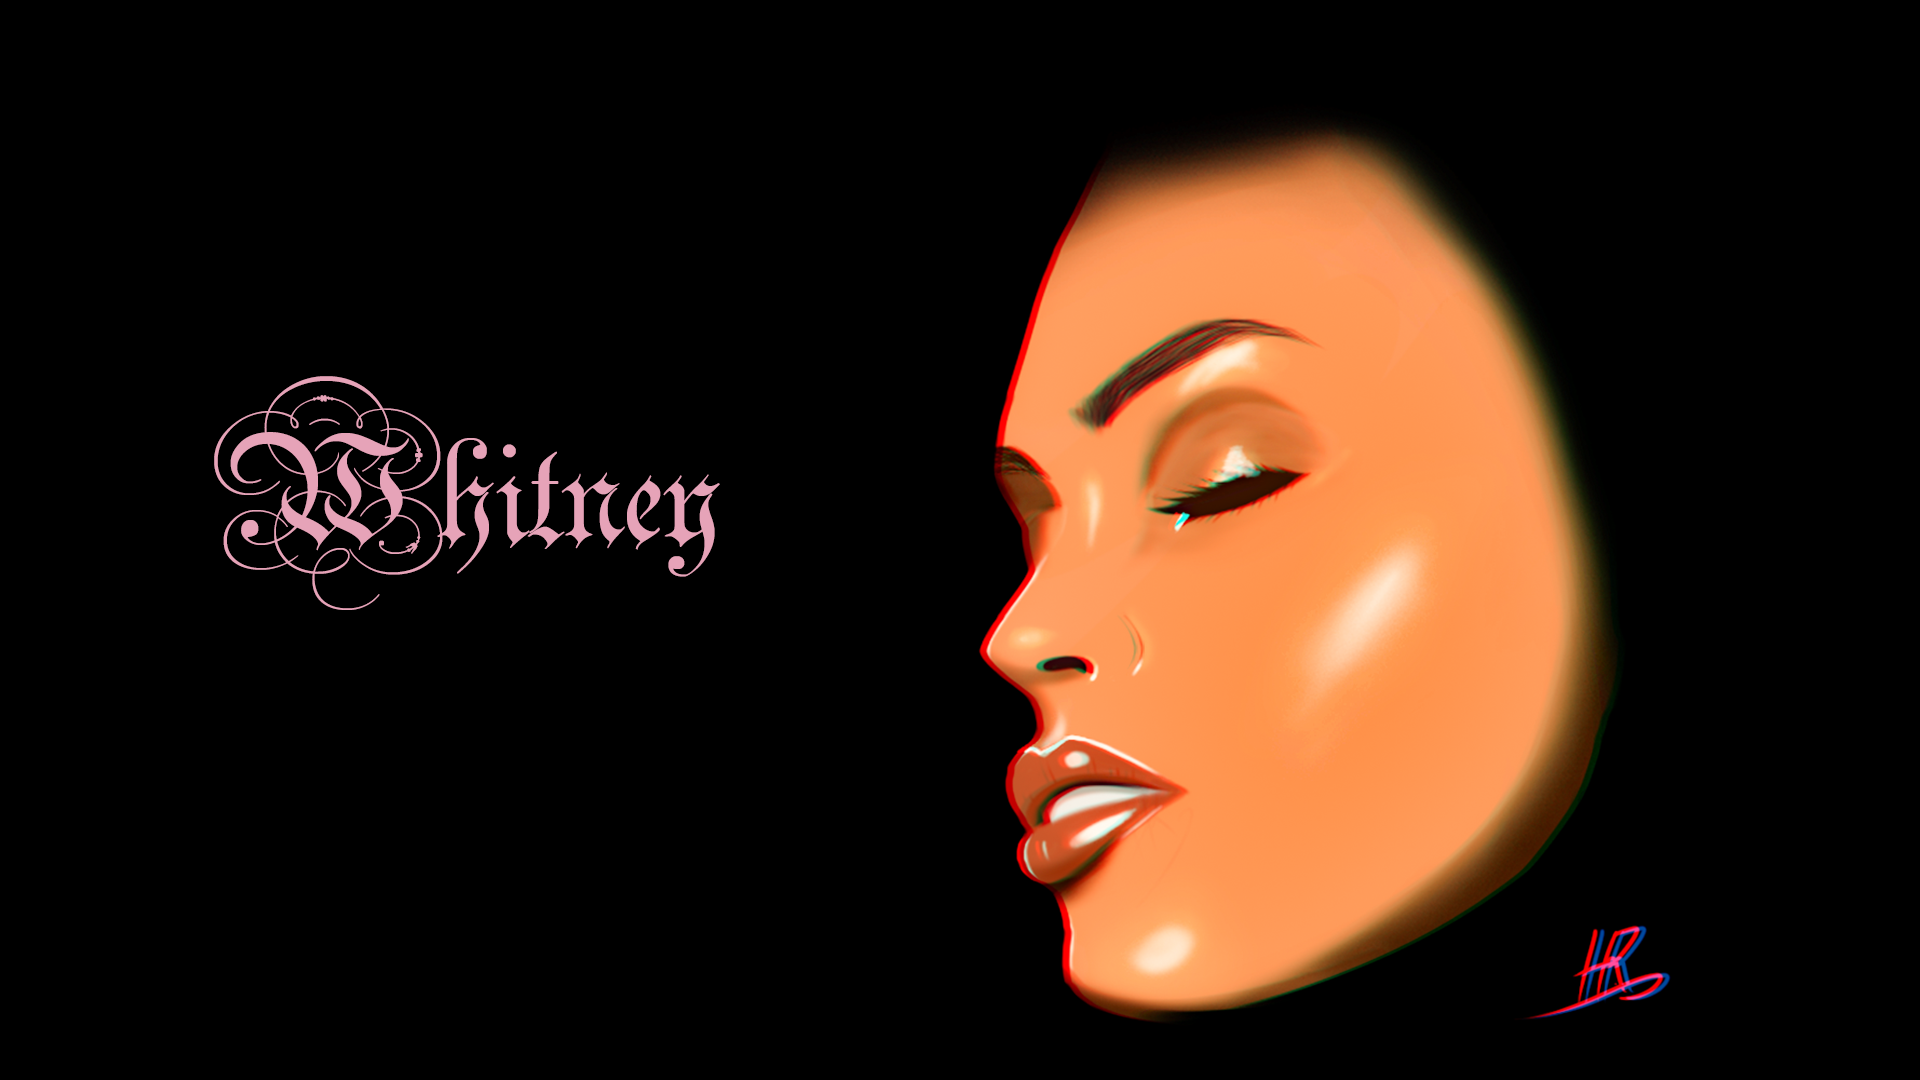 Face Women Lips Digital Text Black Background Shadow Highlights Chromatic Aberration 1920x1080